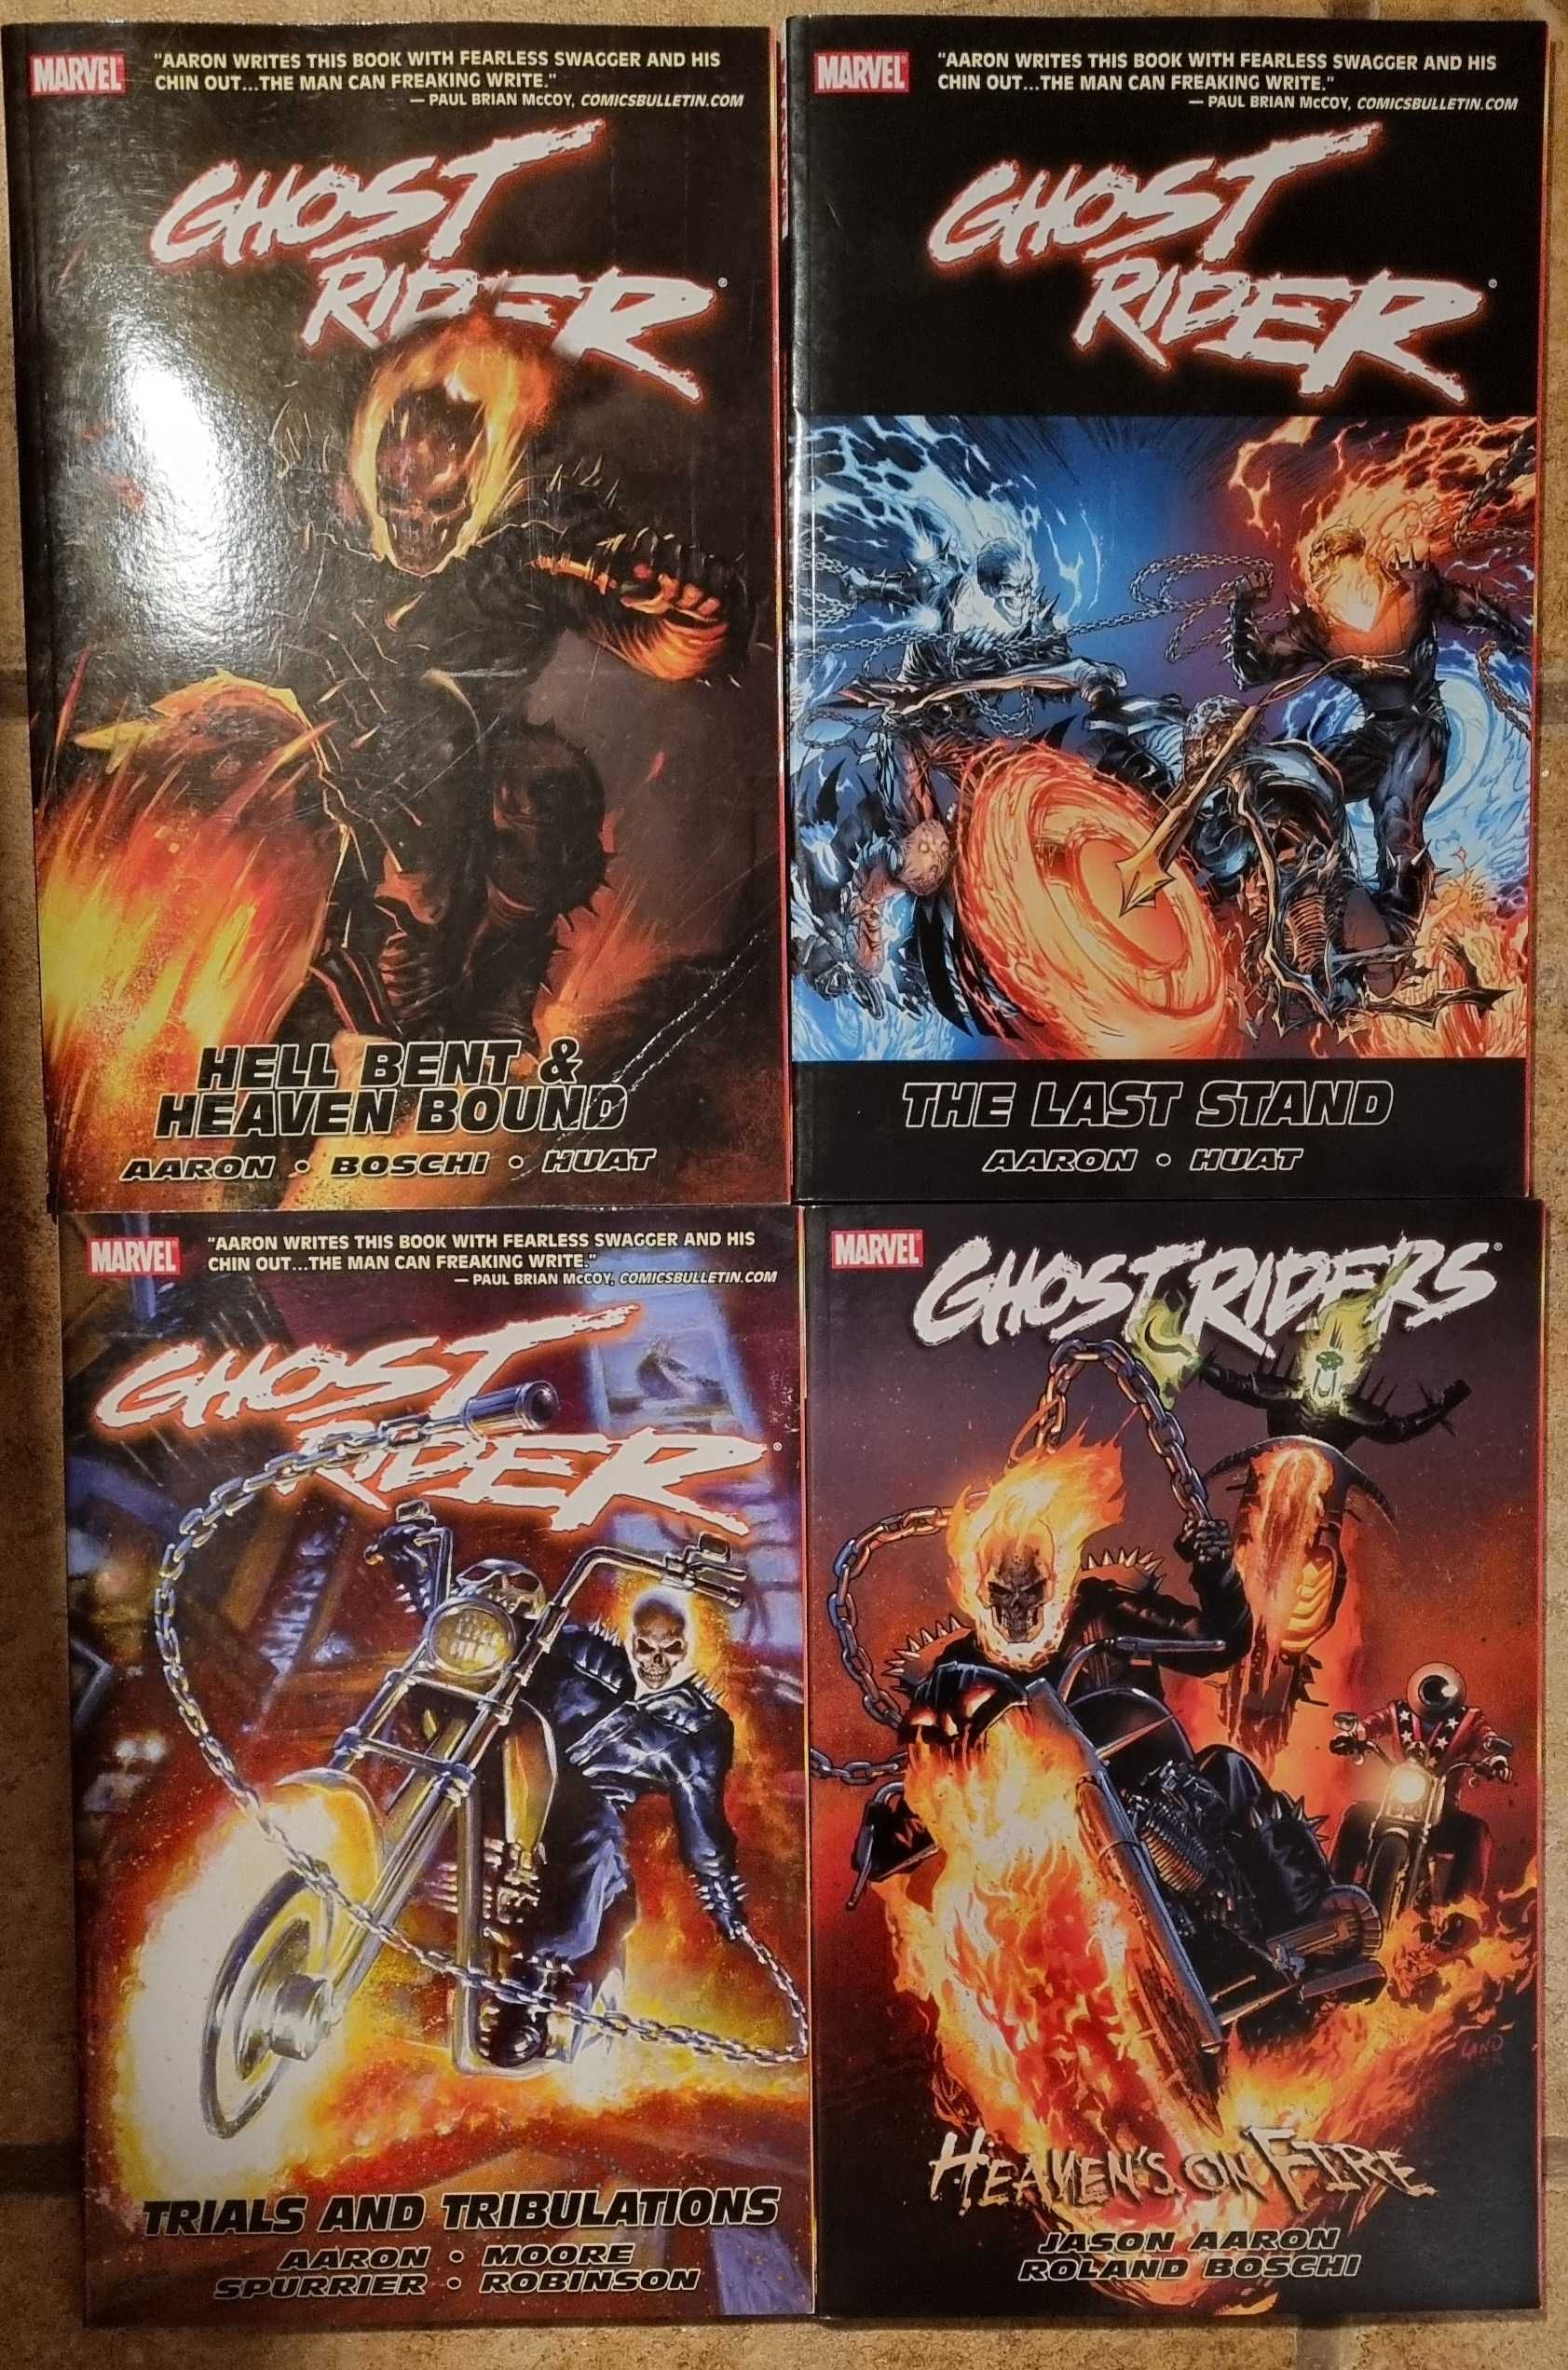 Spider-man, Venom, Young Avengers, Daredevil, Ghost Rider